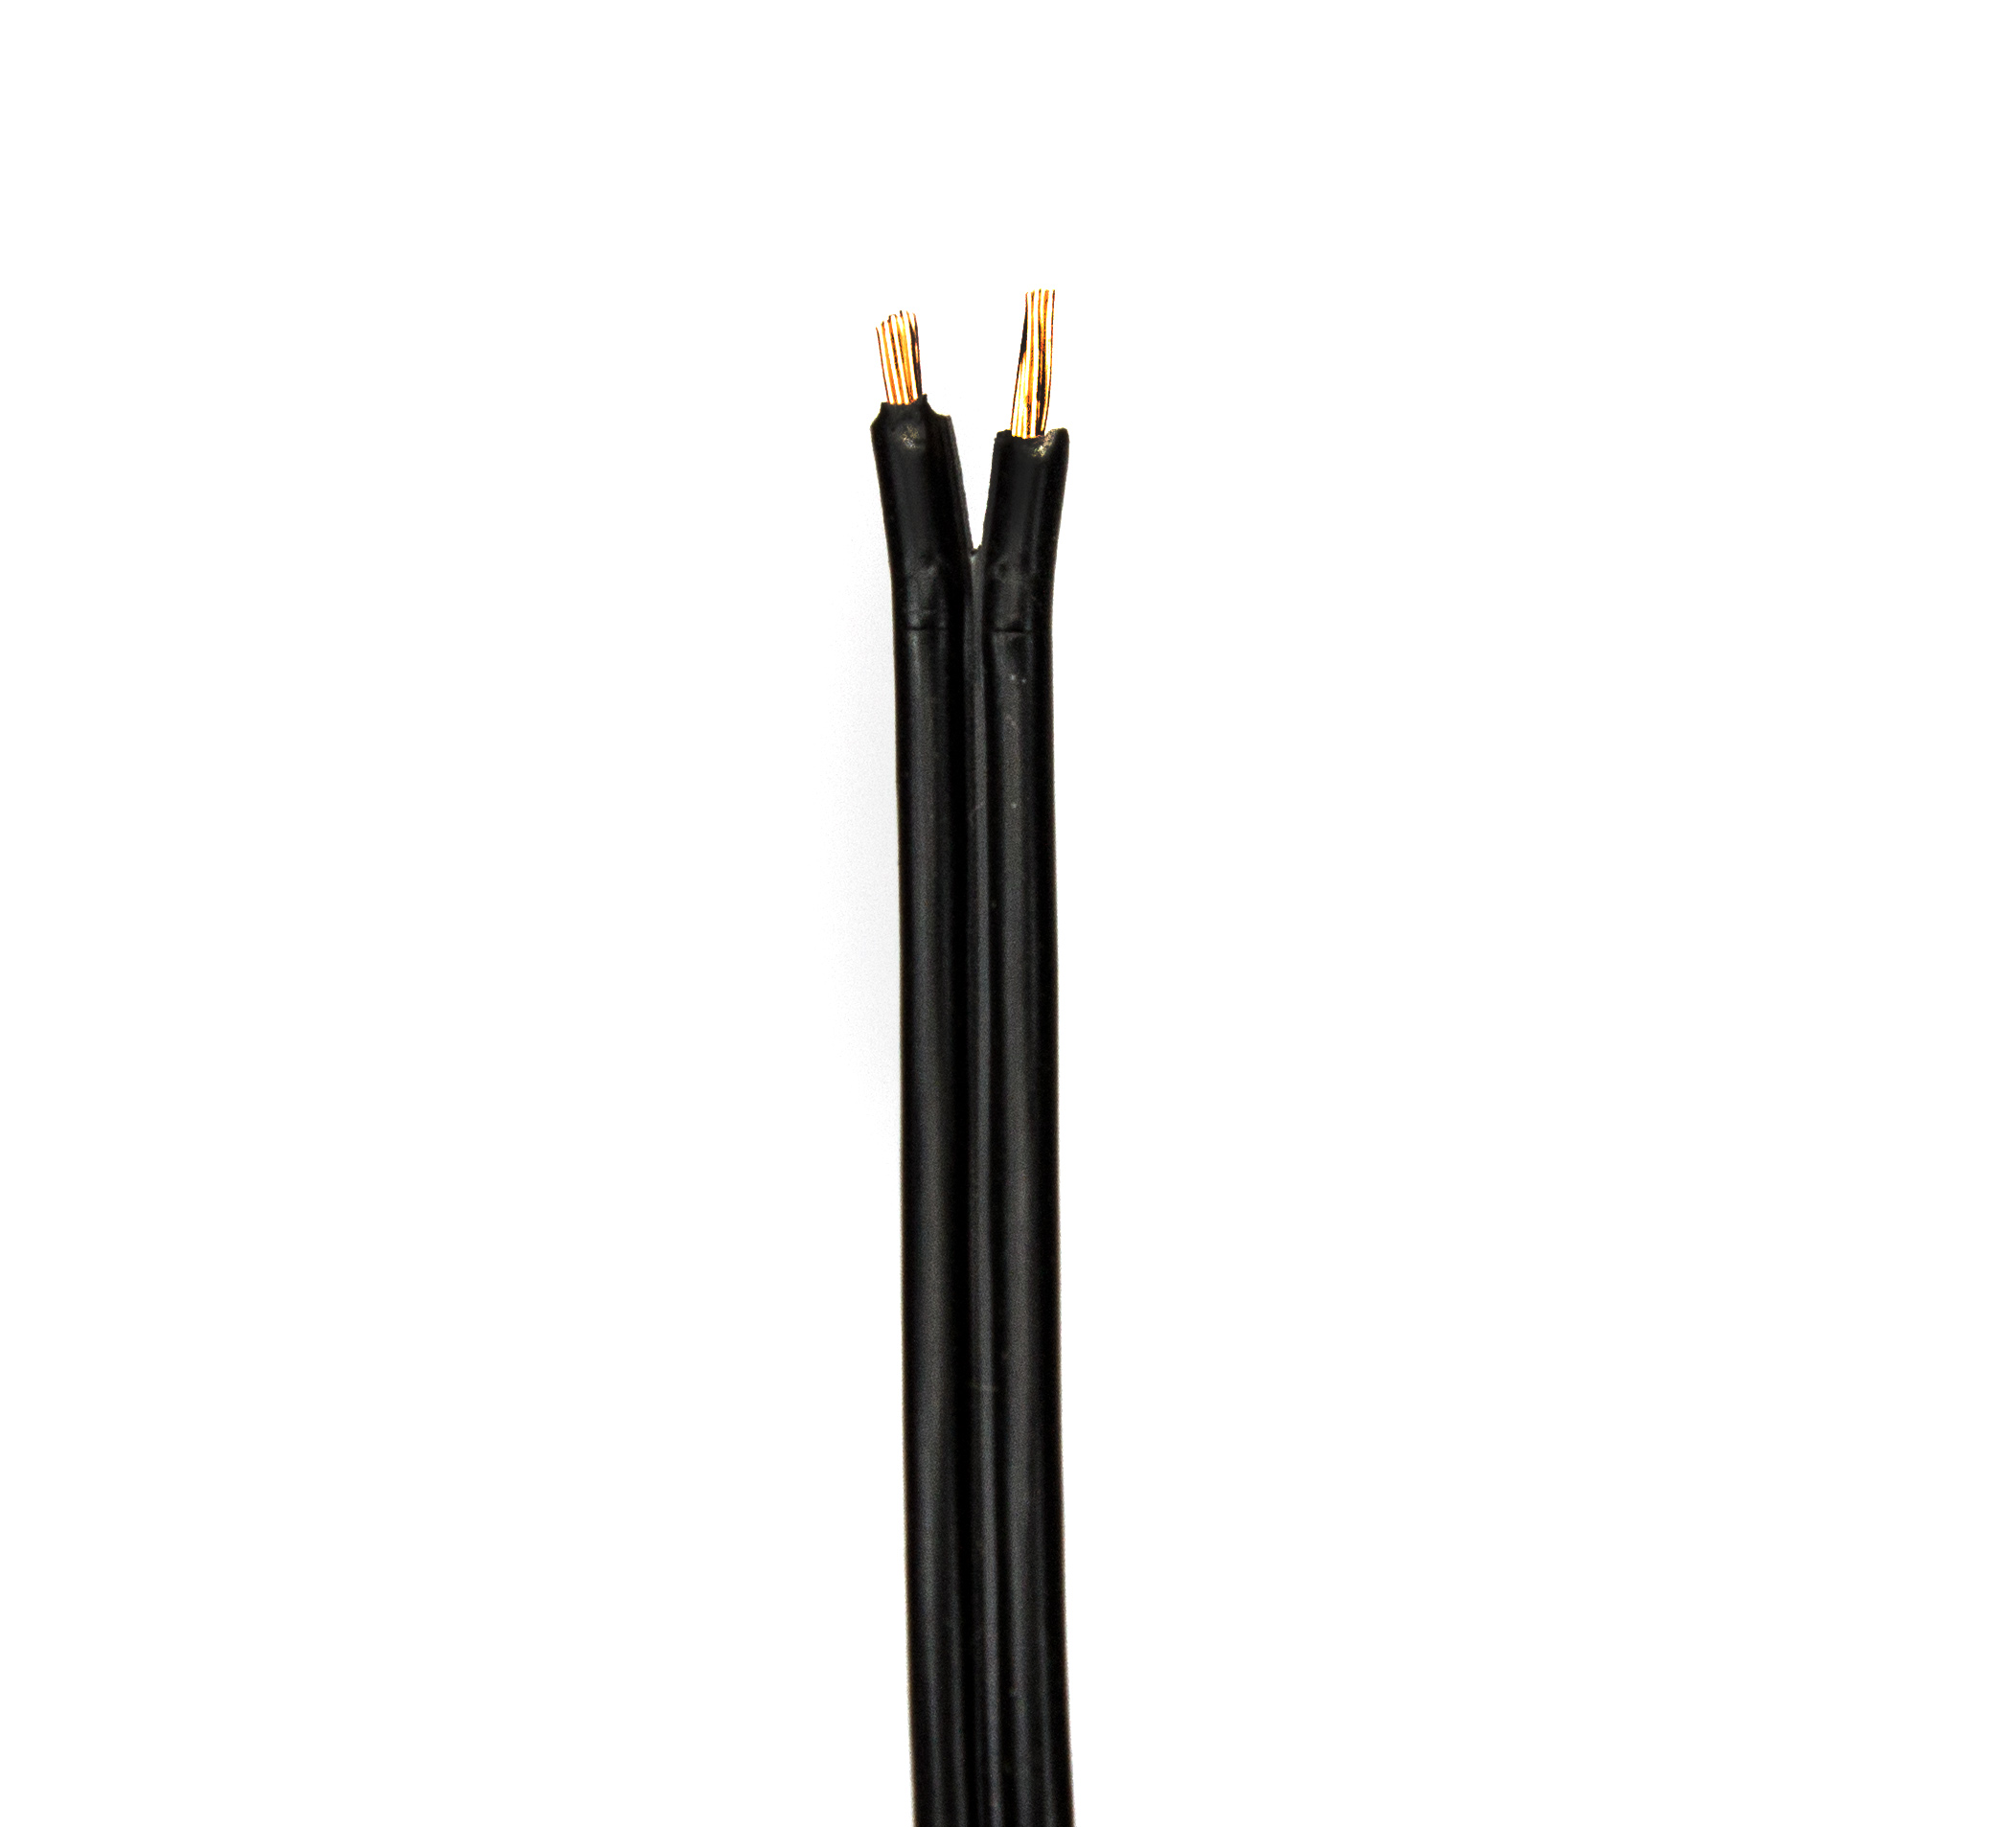 Zwillingslitze 2x 0,4 qmm, LIYZ schwarz, 2-adriges Kabel